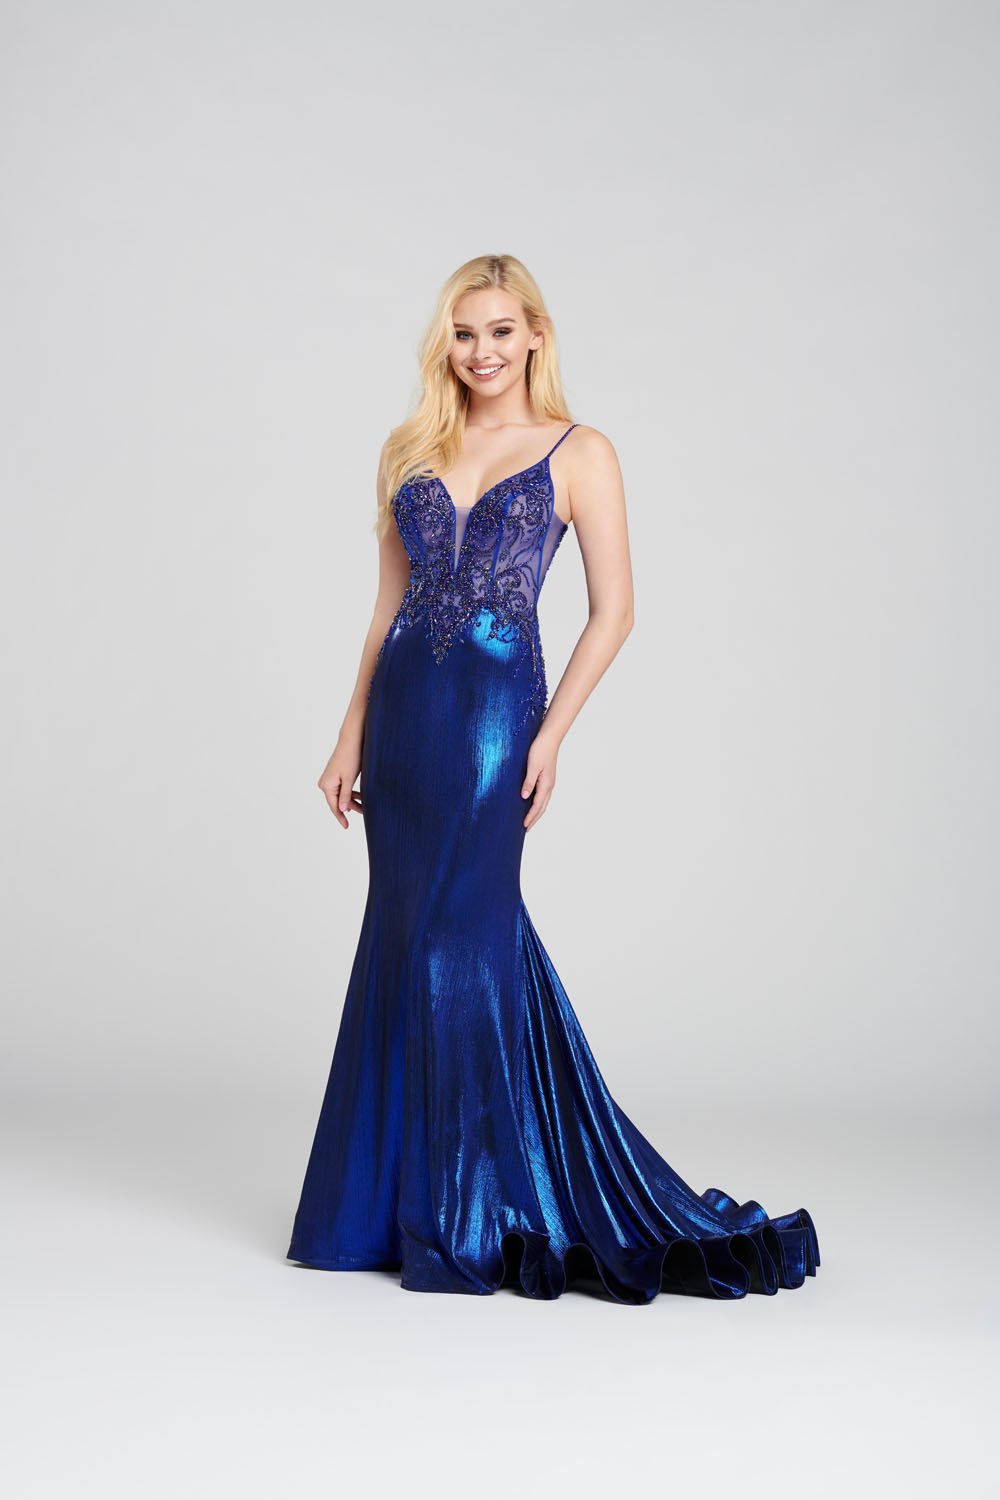 ellie wilde light blue prom dress